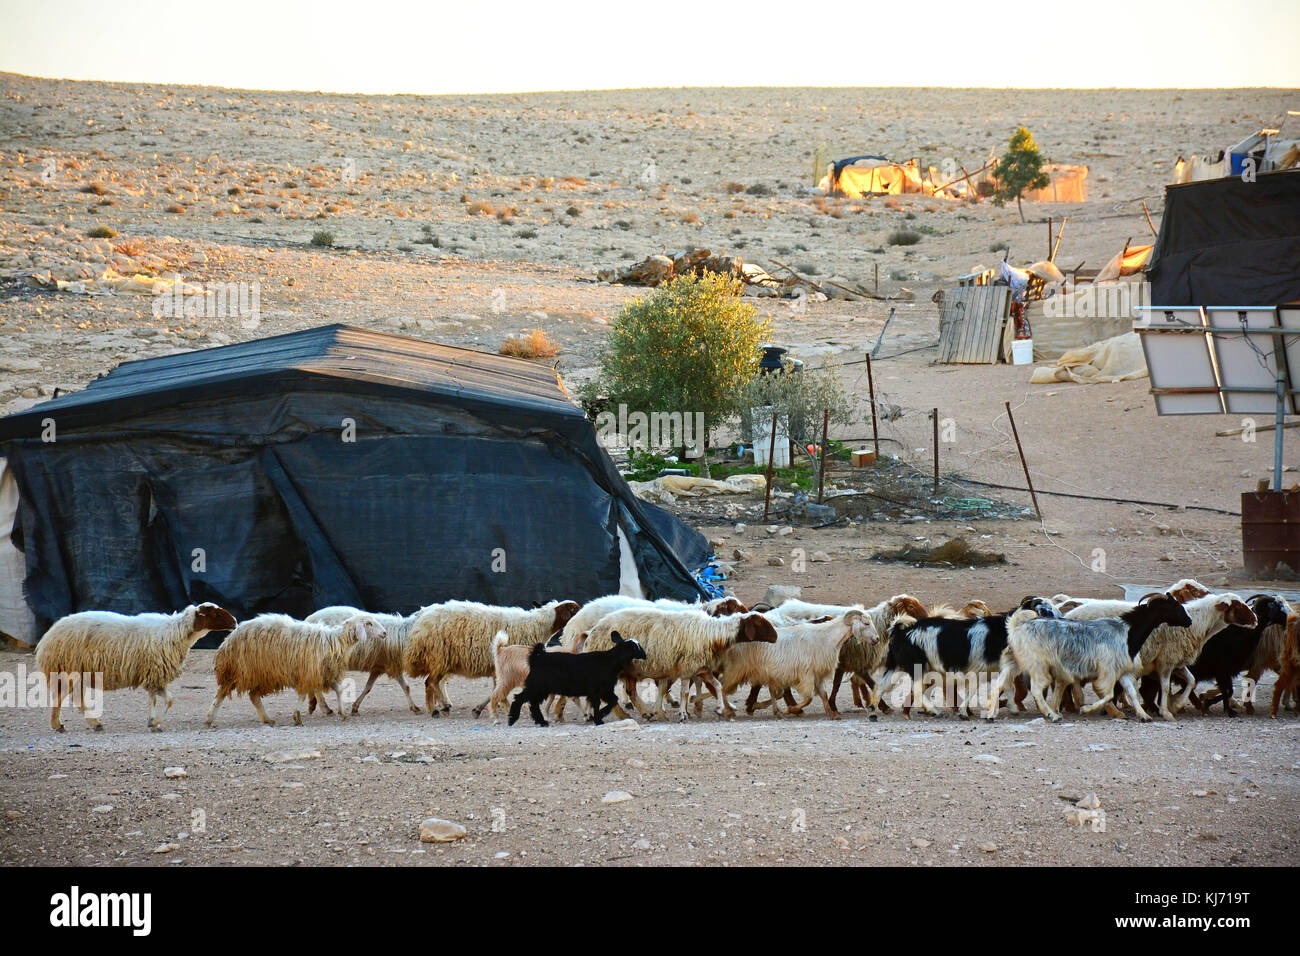 Bedouin village, Israel Stock Photo